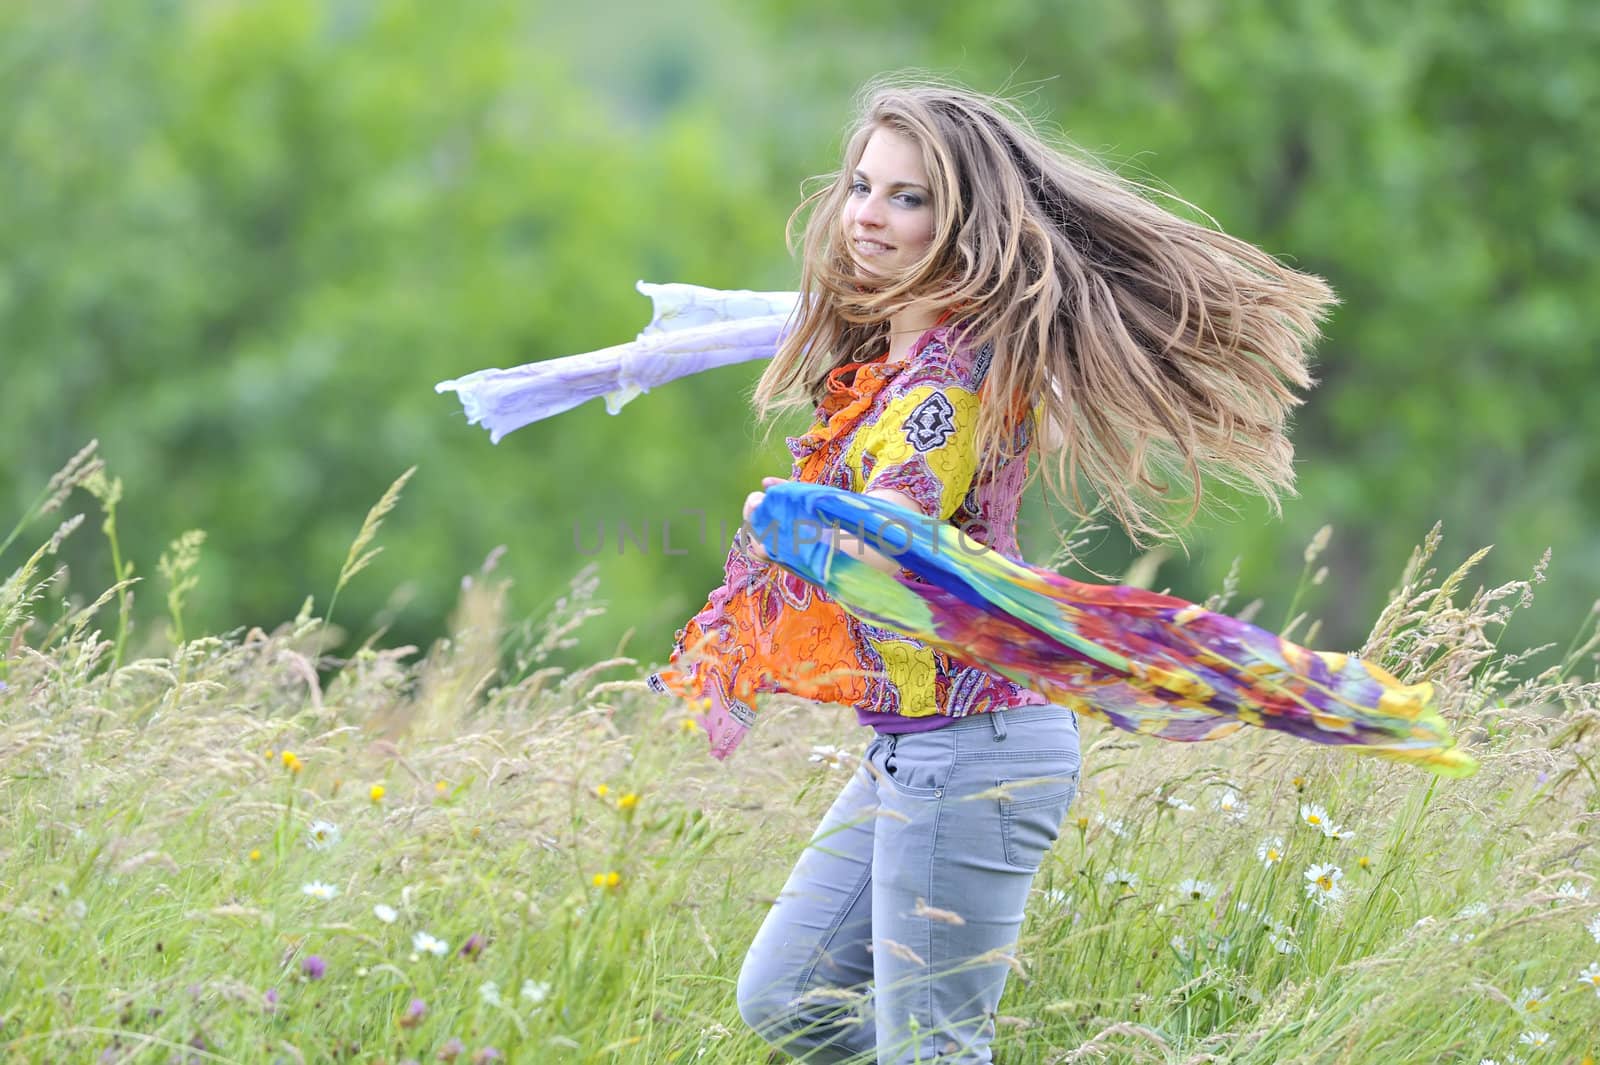 Jumping girl against summer meadow by jordachelr